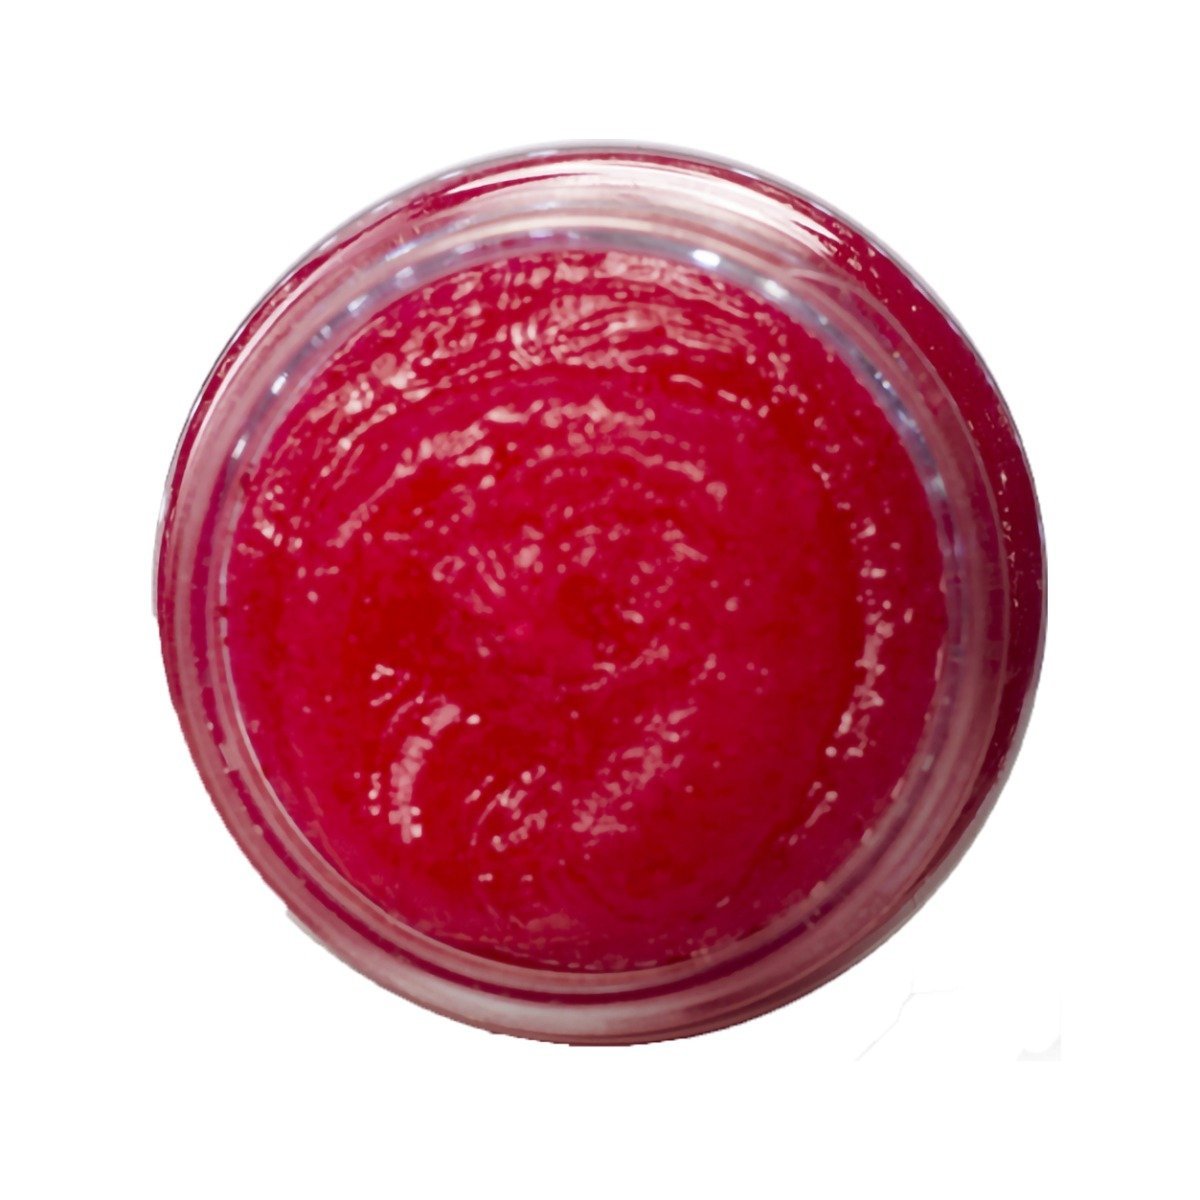 Hadwa Cosmetics Strawberry Lip Scrub – 80gm - Bloom Pharmacy